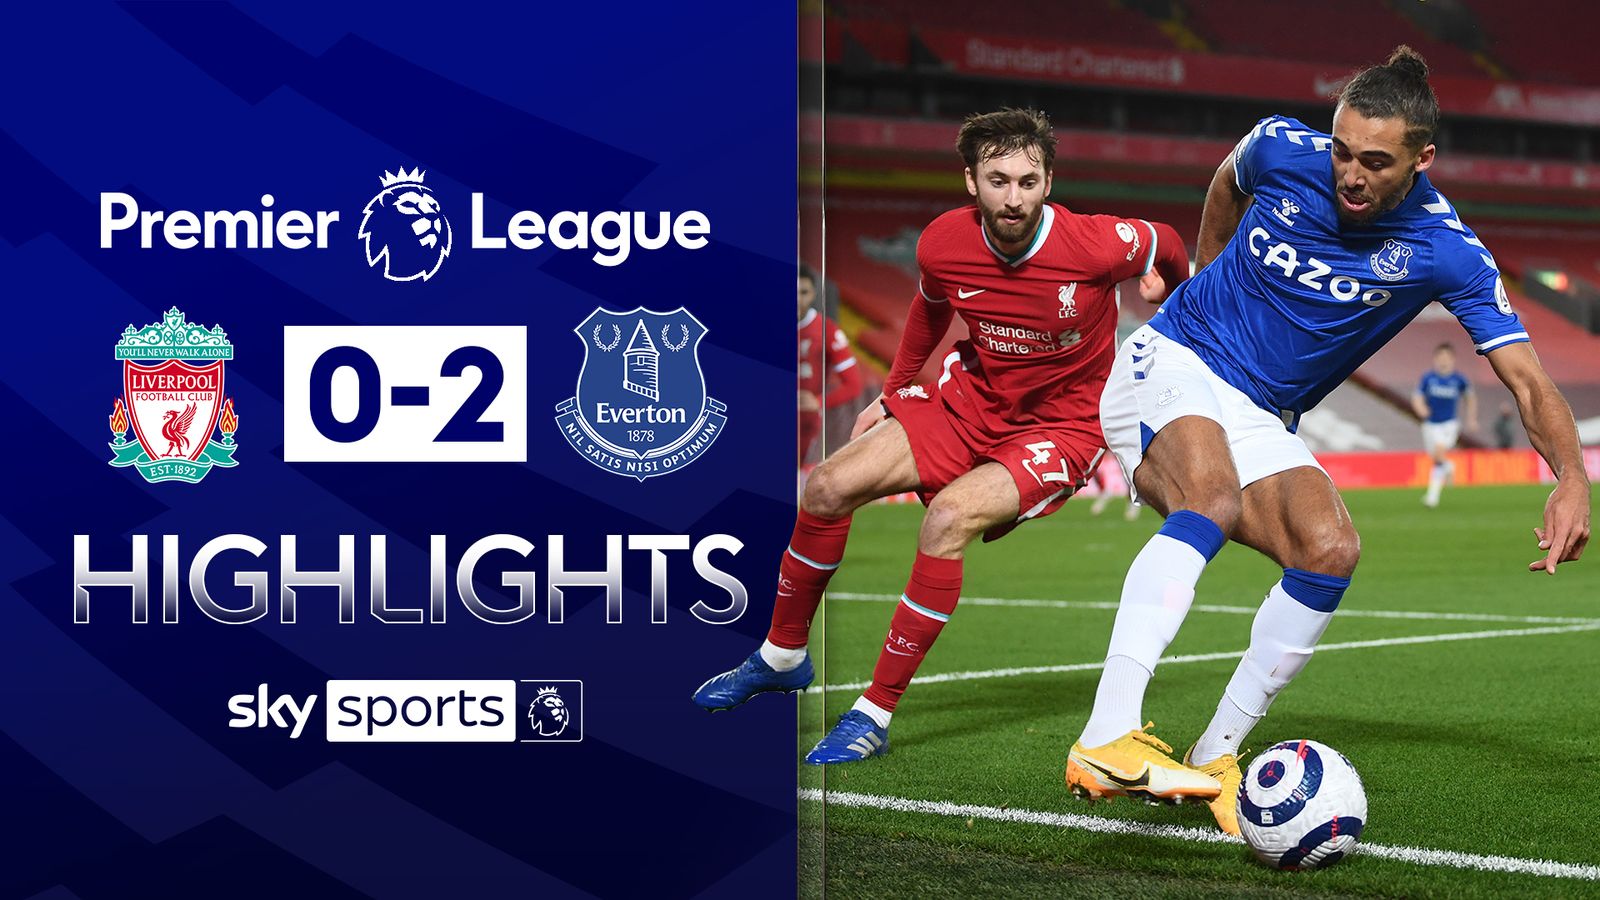 Liverpool 0 - 2 Everton - Match Report & Highlights